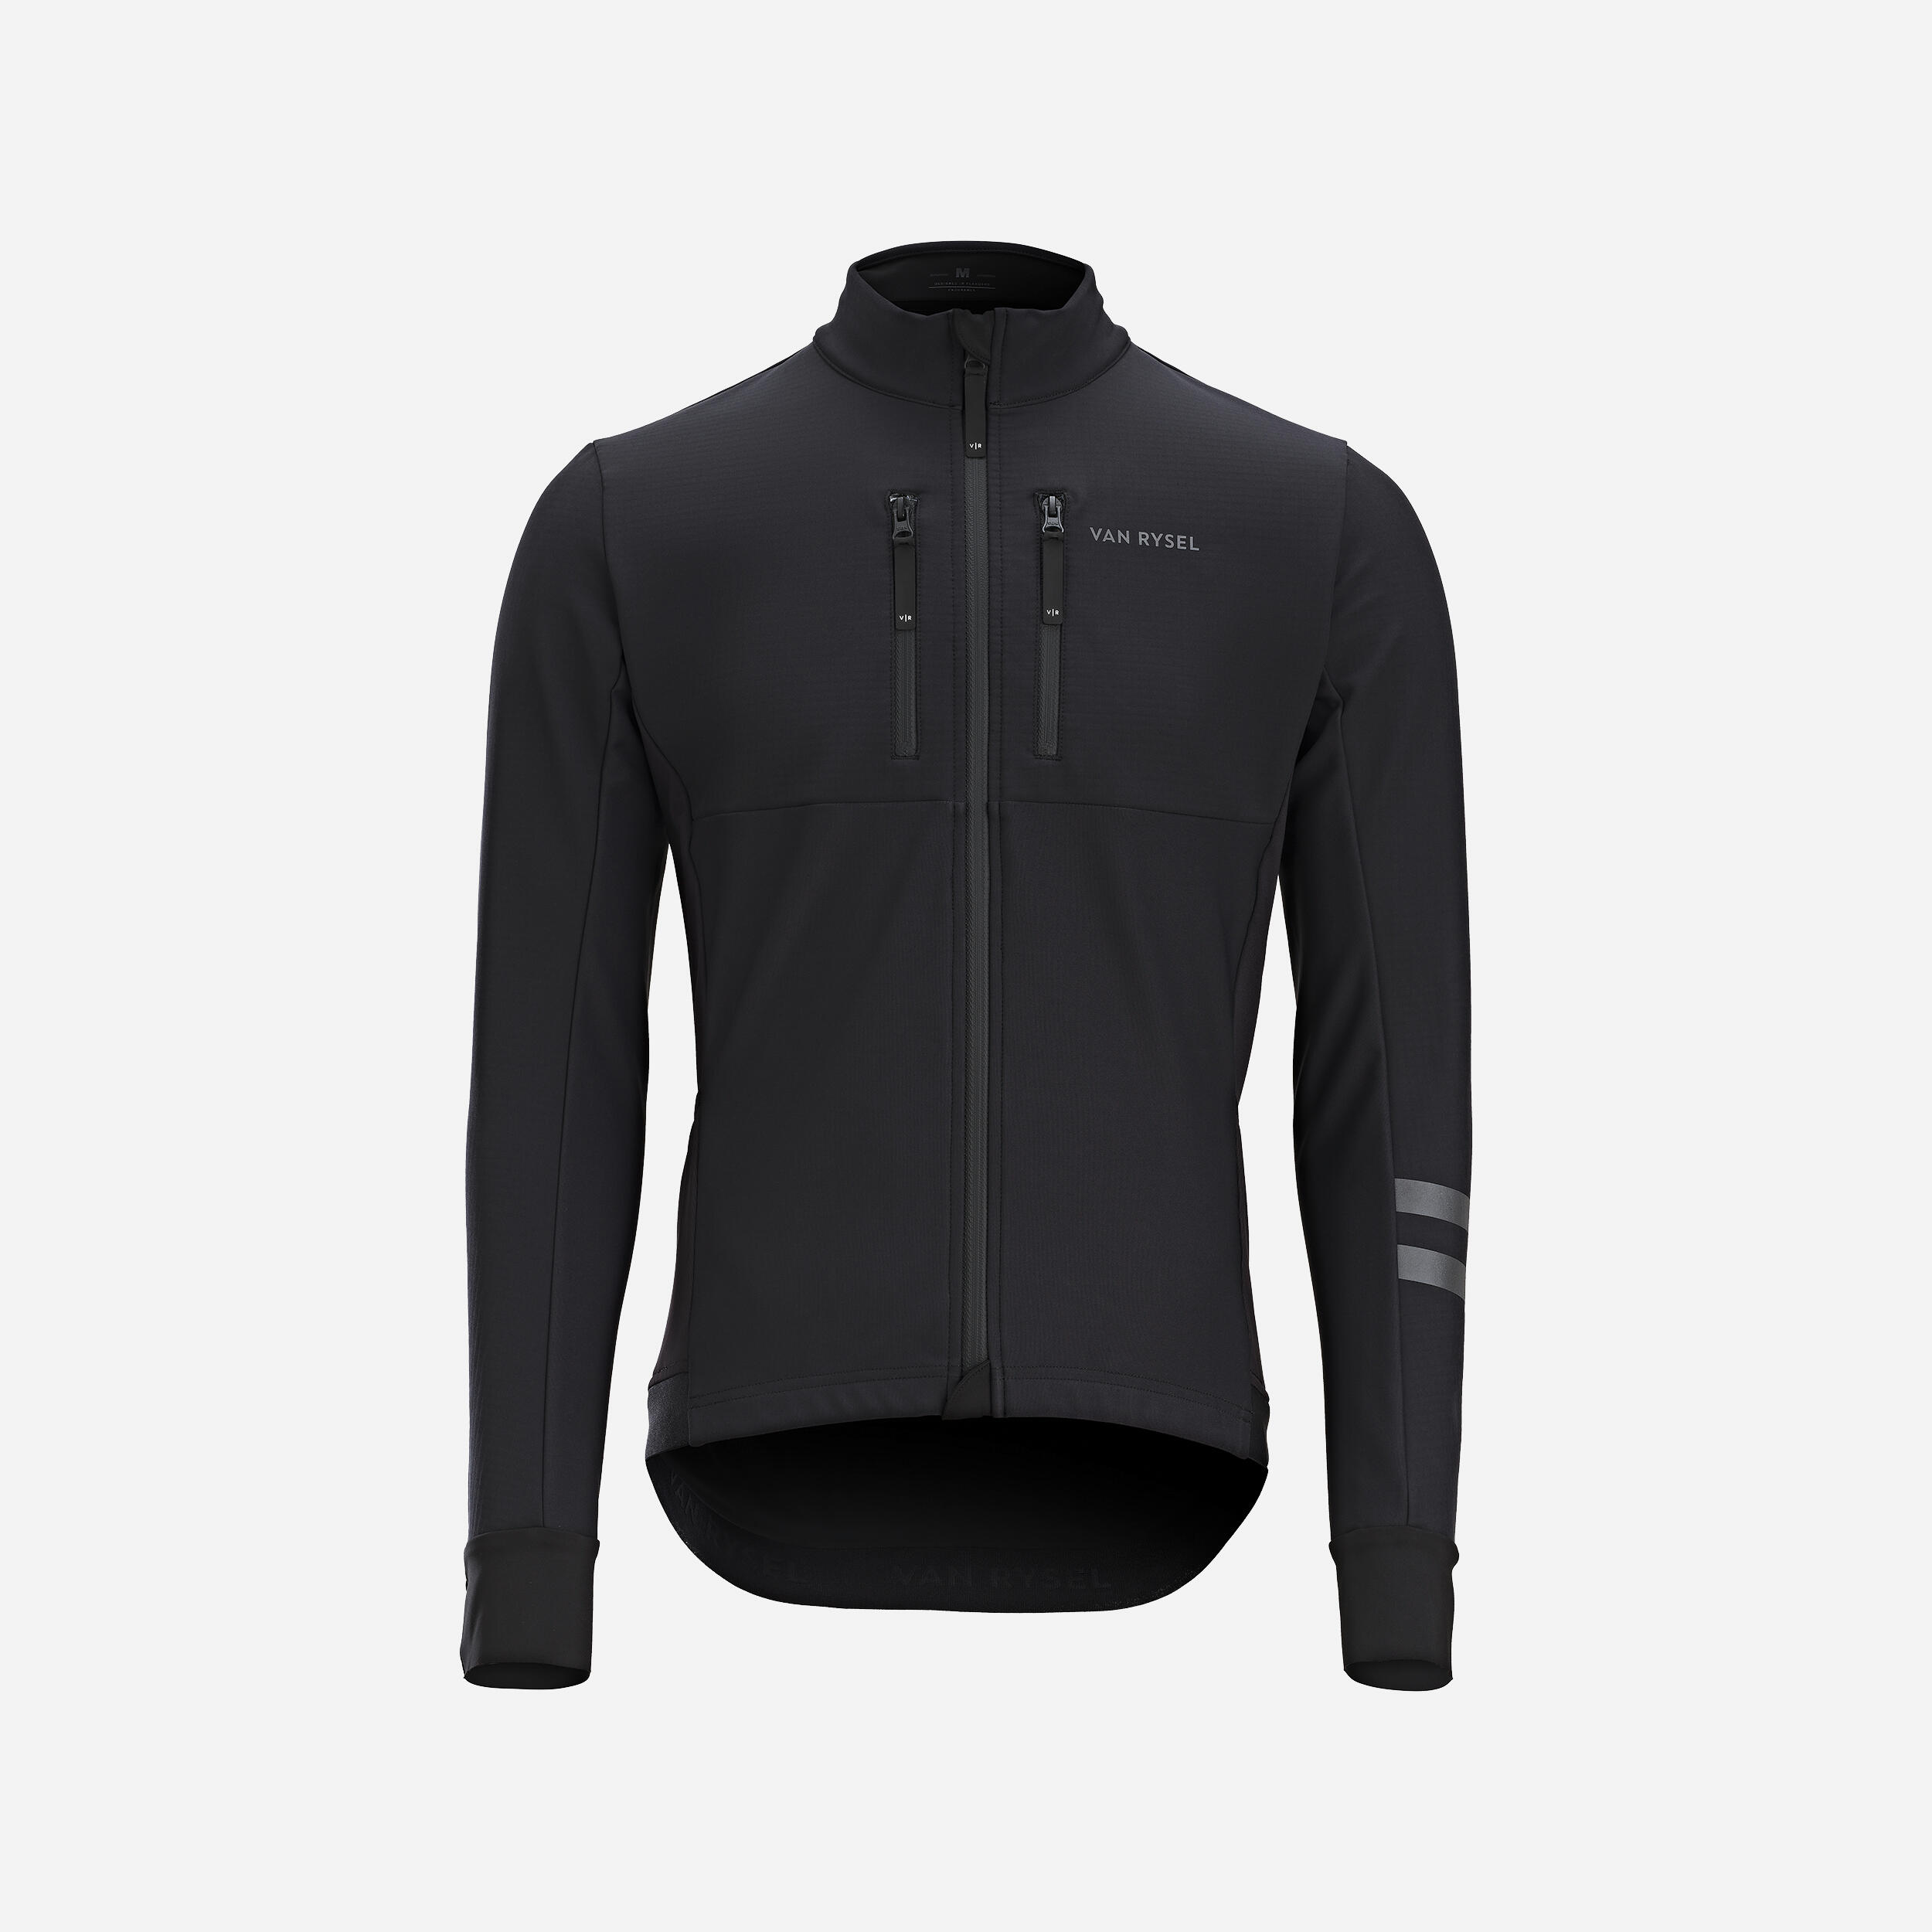 VAN RYSEL Men's Winter Road Cycling Jacket Endurance - Black